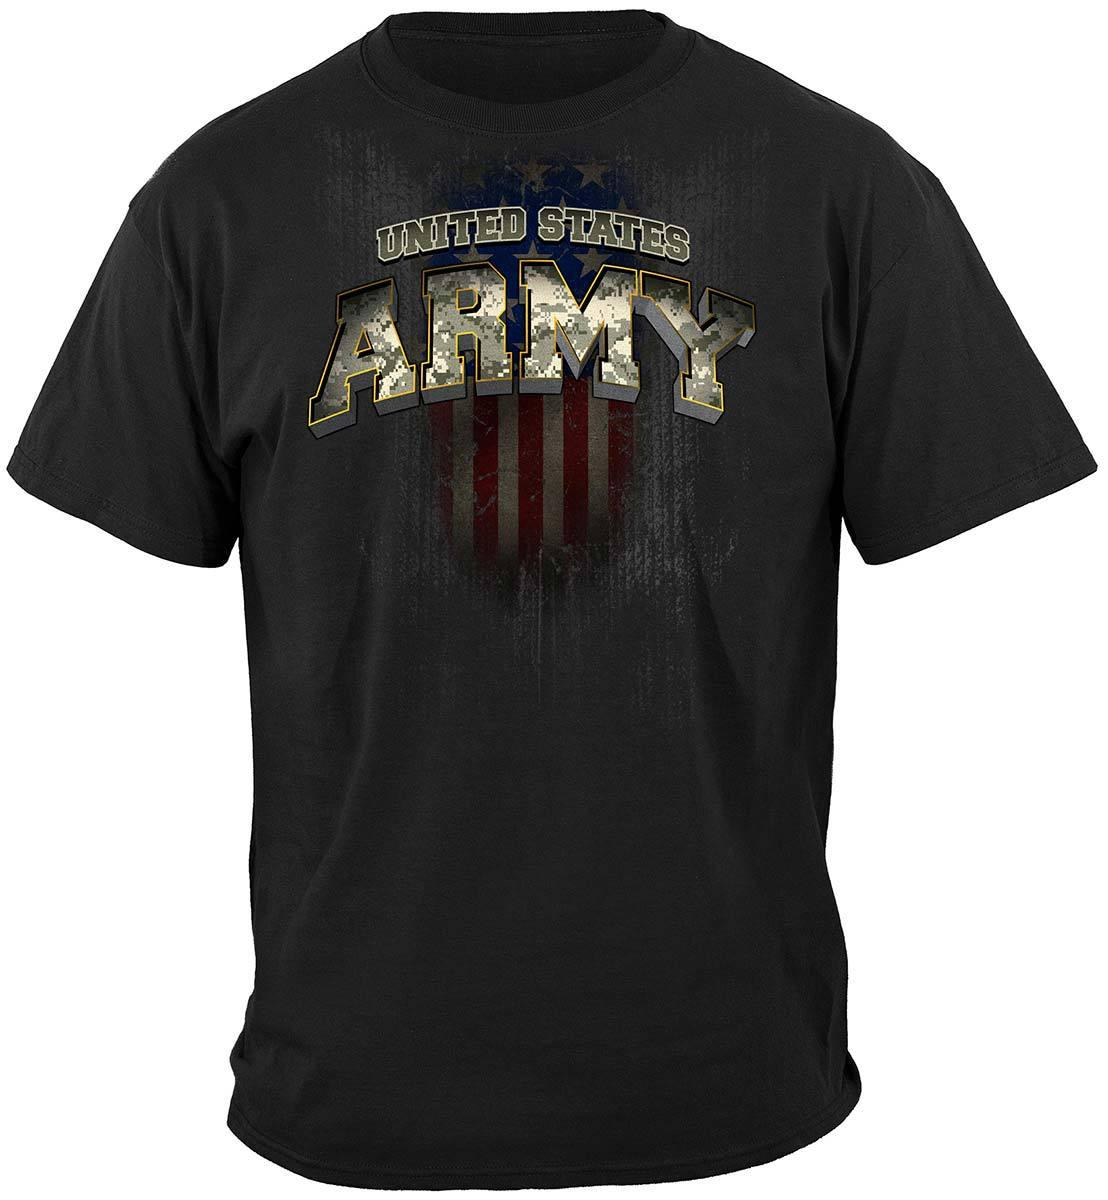 Army Loyalty Eagle Hoodie - Military Republic